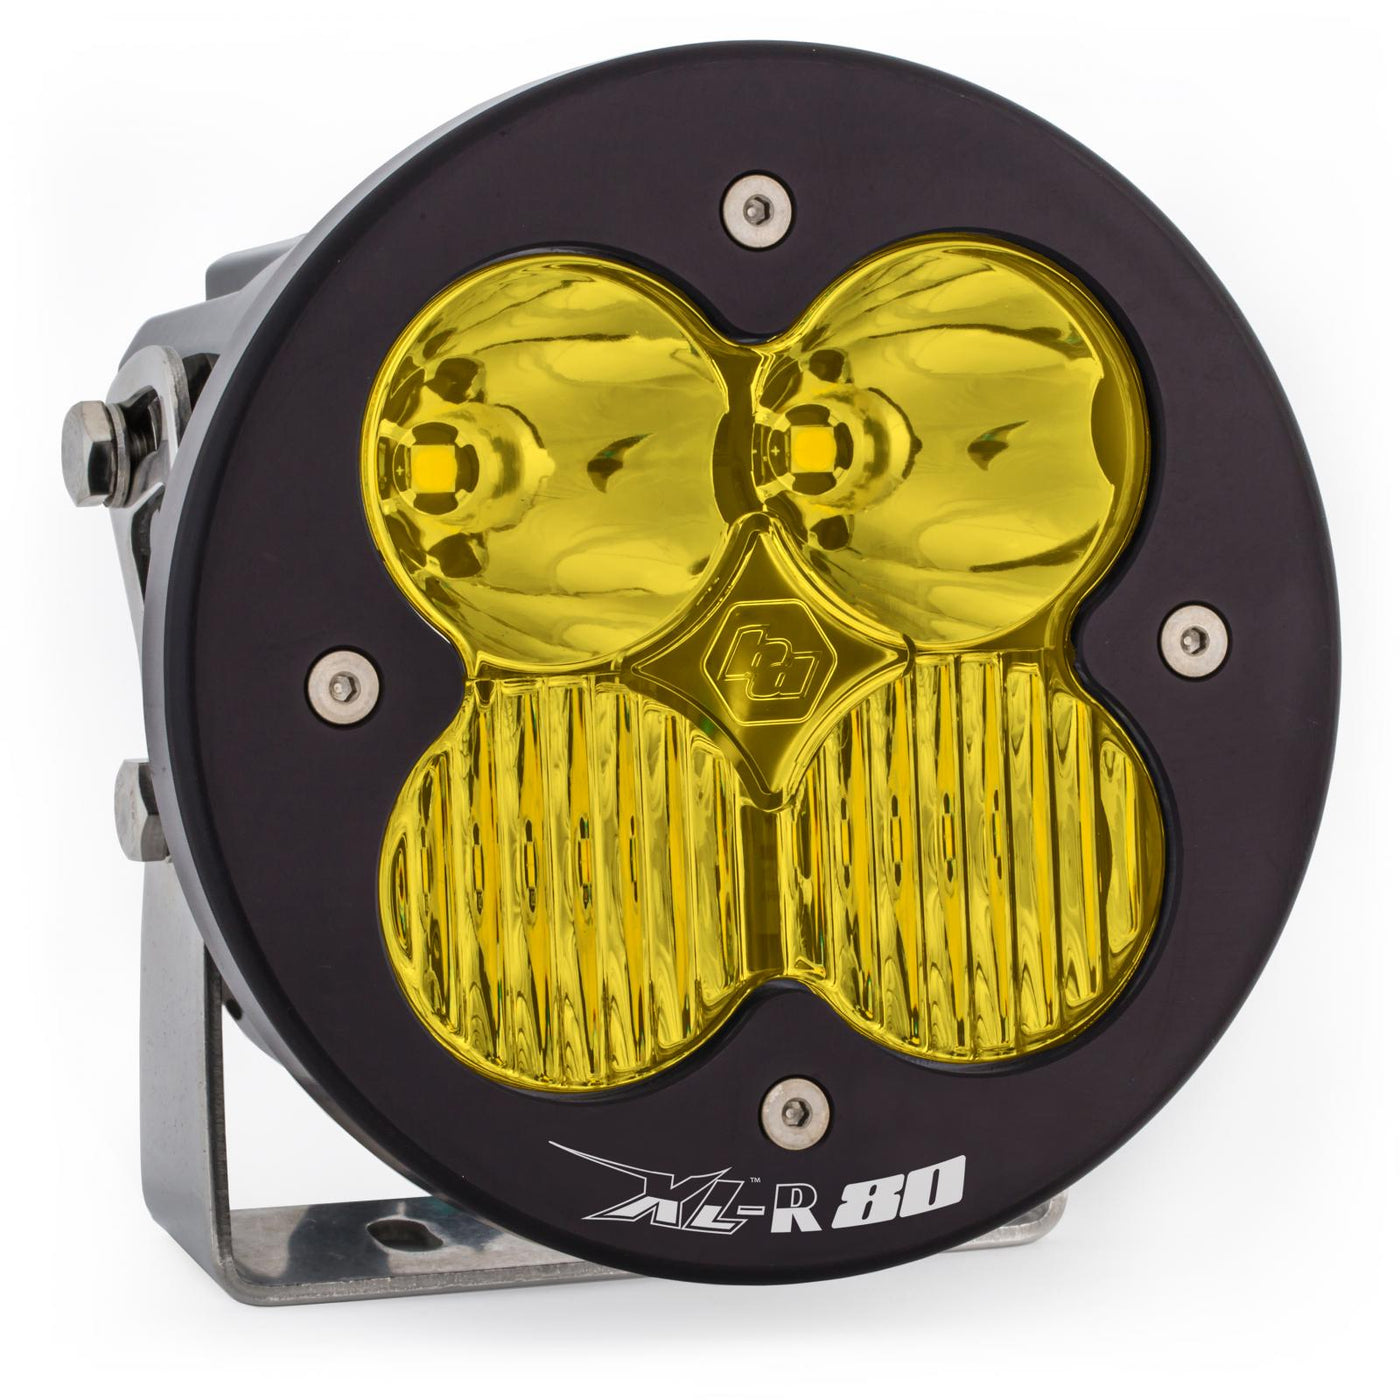 Baja Designs 760013 LED Light Pods Amber Lens Spot XL R 80 DrivingCombo